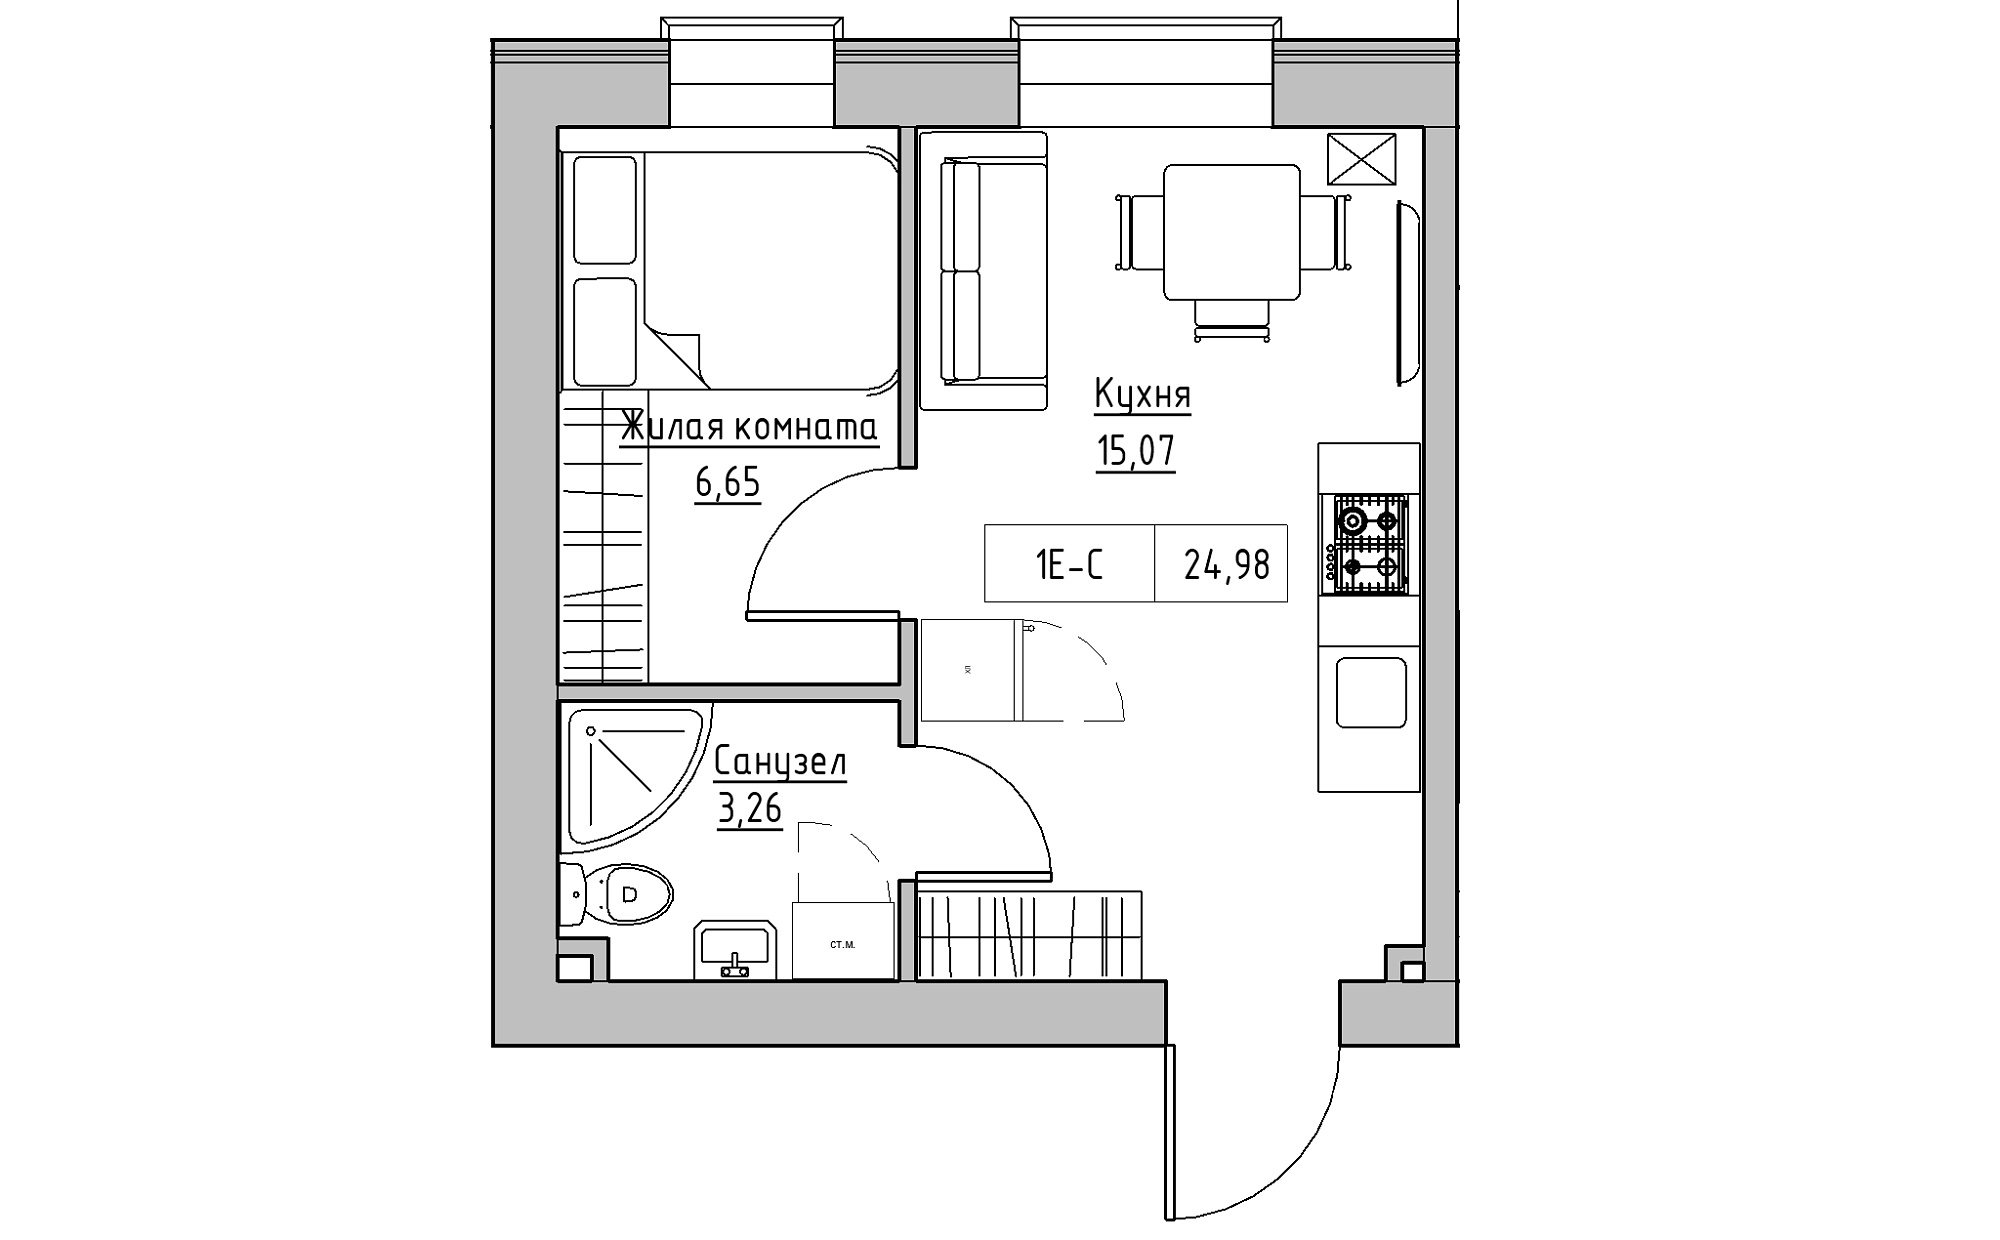 Planning 1-rm flats area 24.98m2, KS-022-01/0004.